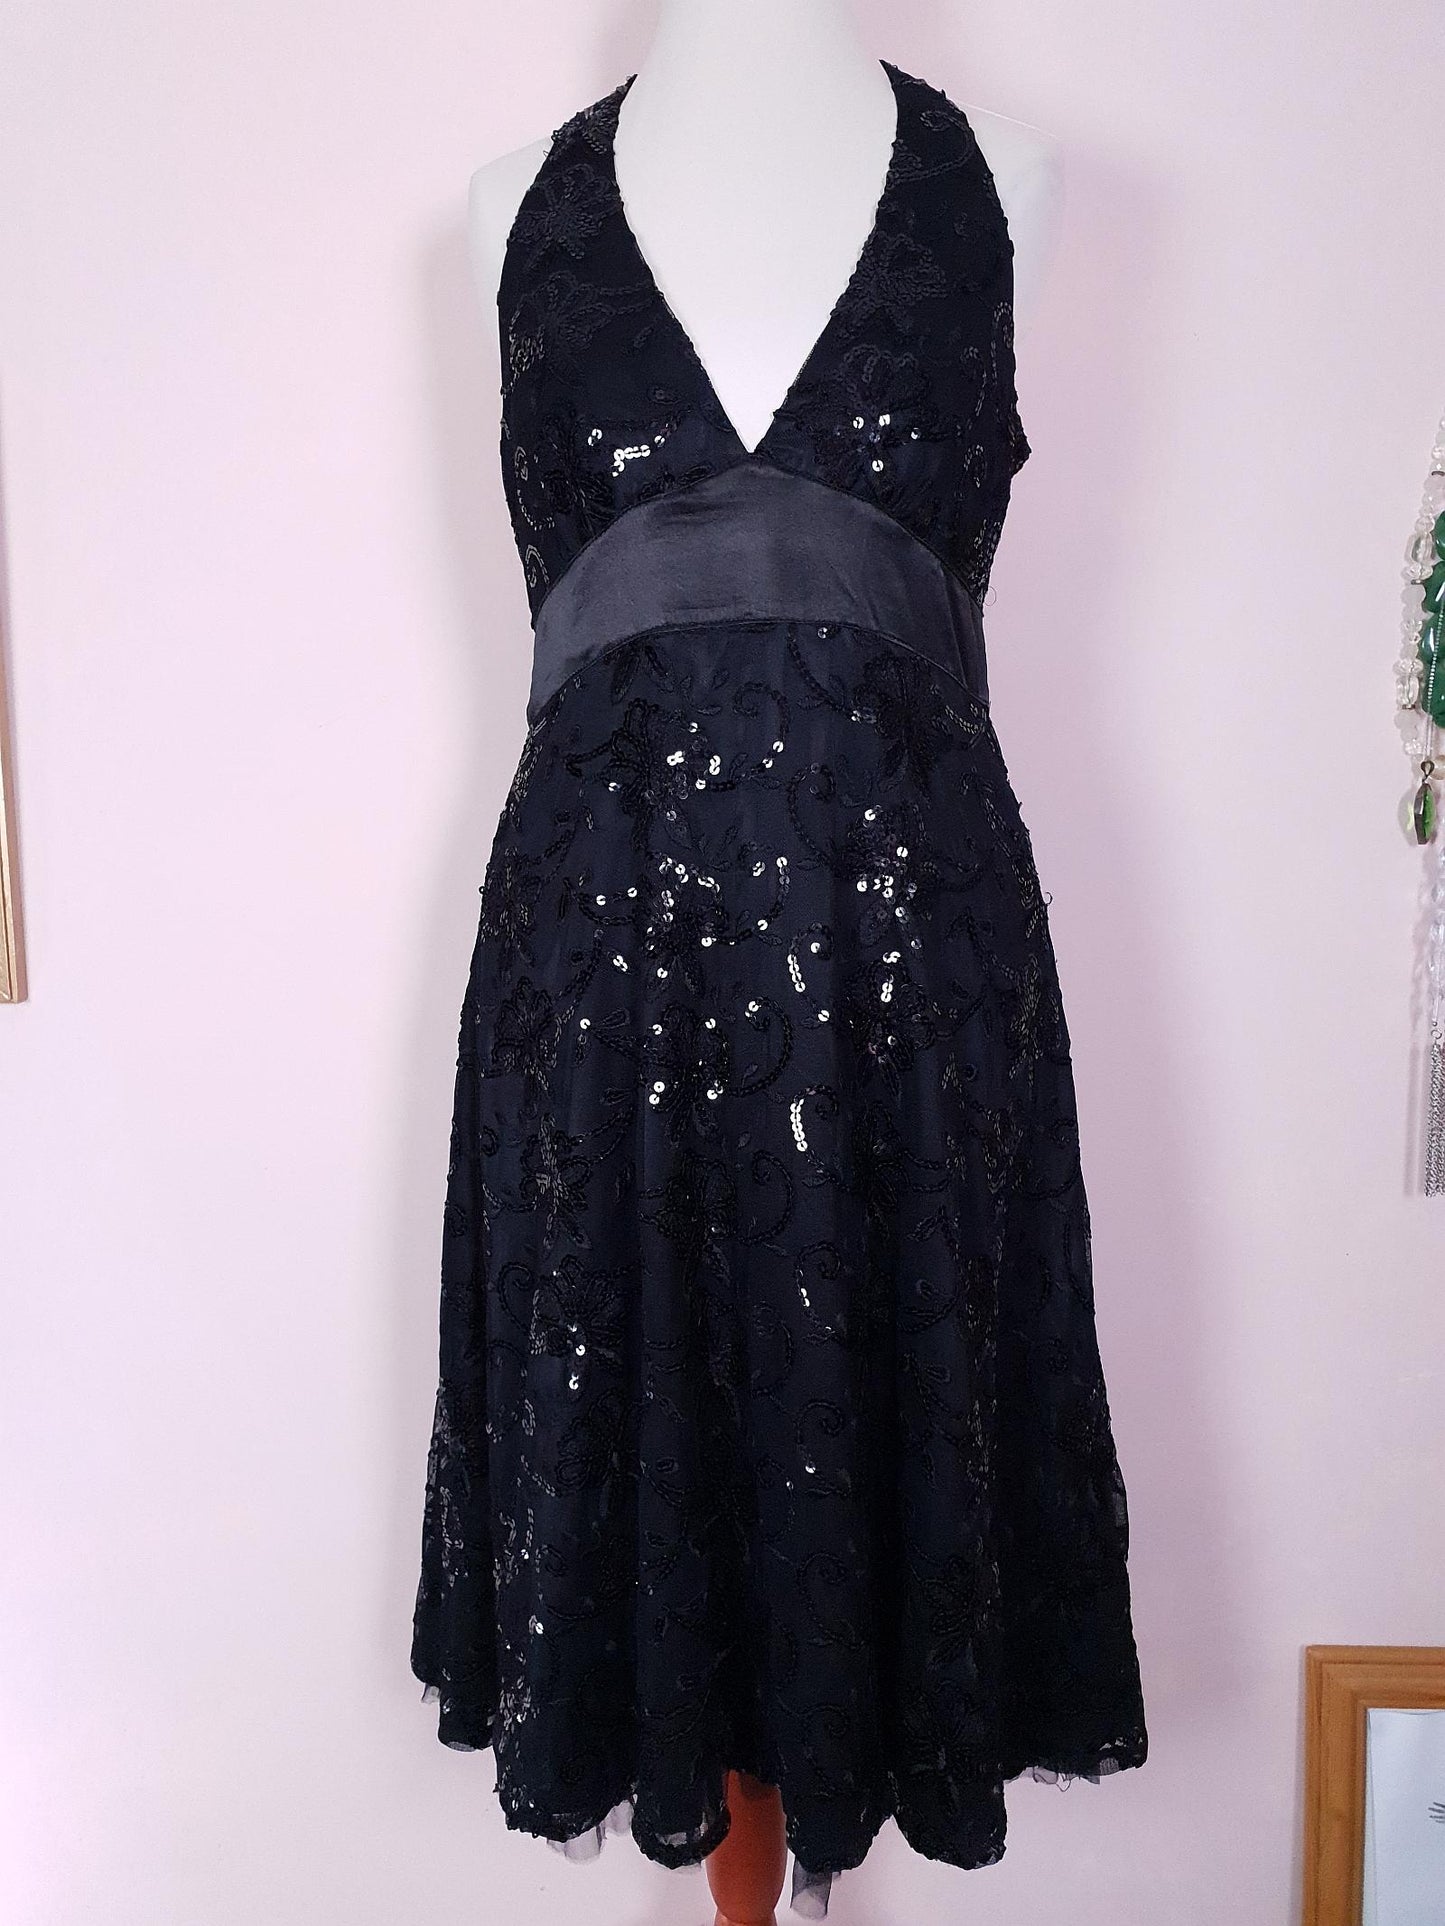 Vintage Black Sequin Party Dress 1990s Halter Neck LBD Size 10 Fit & Flare Midi